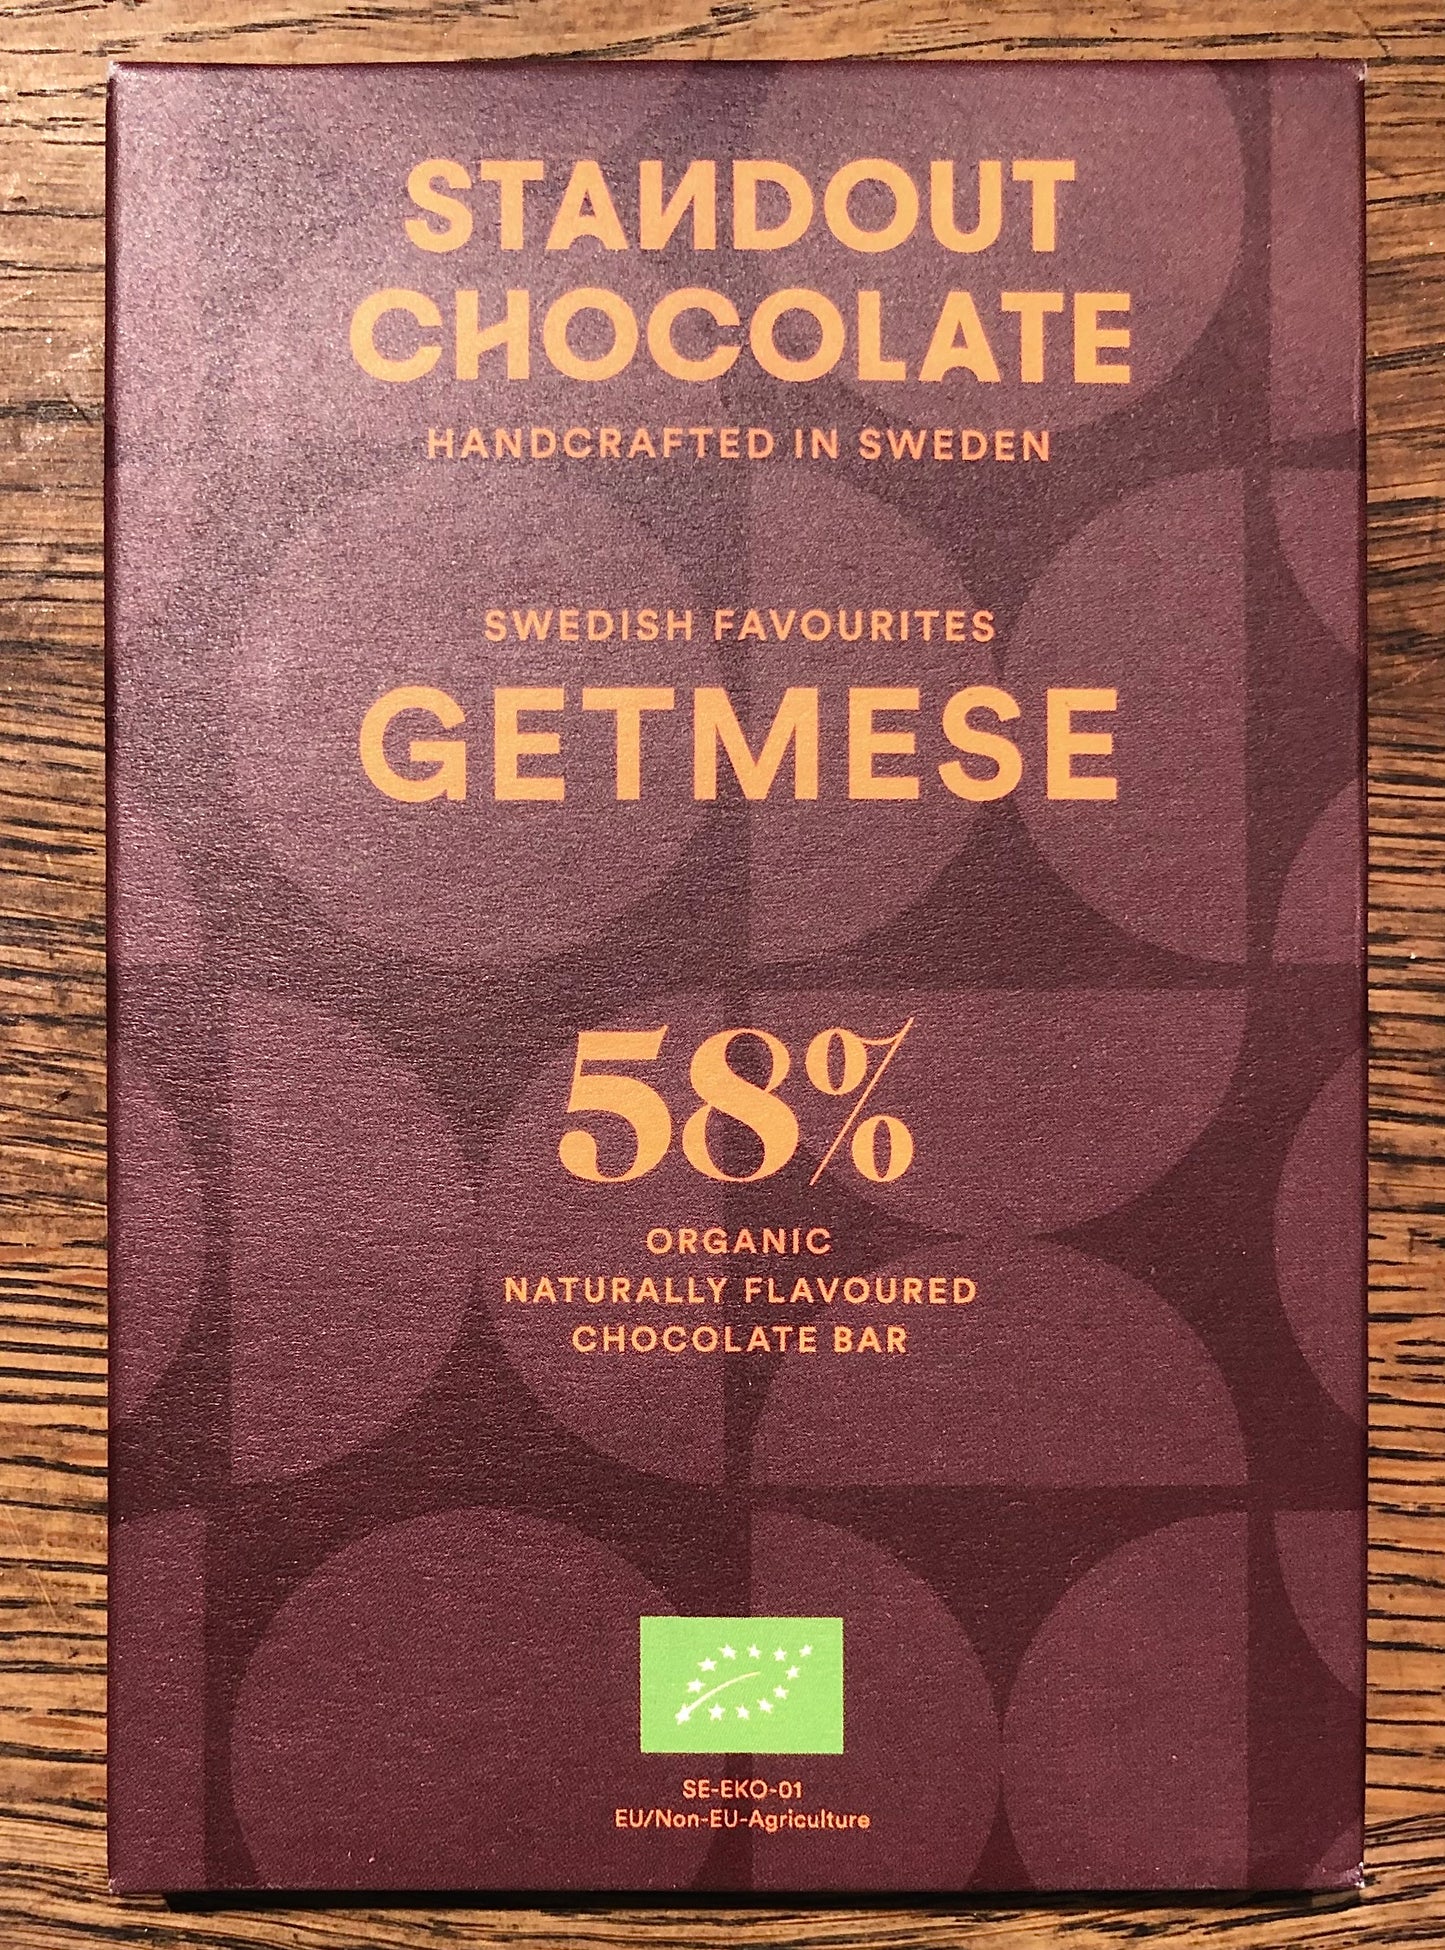 Standout Chocolate Getmese